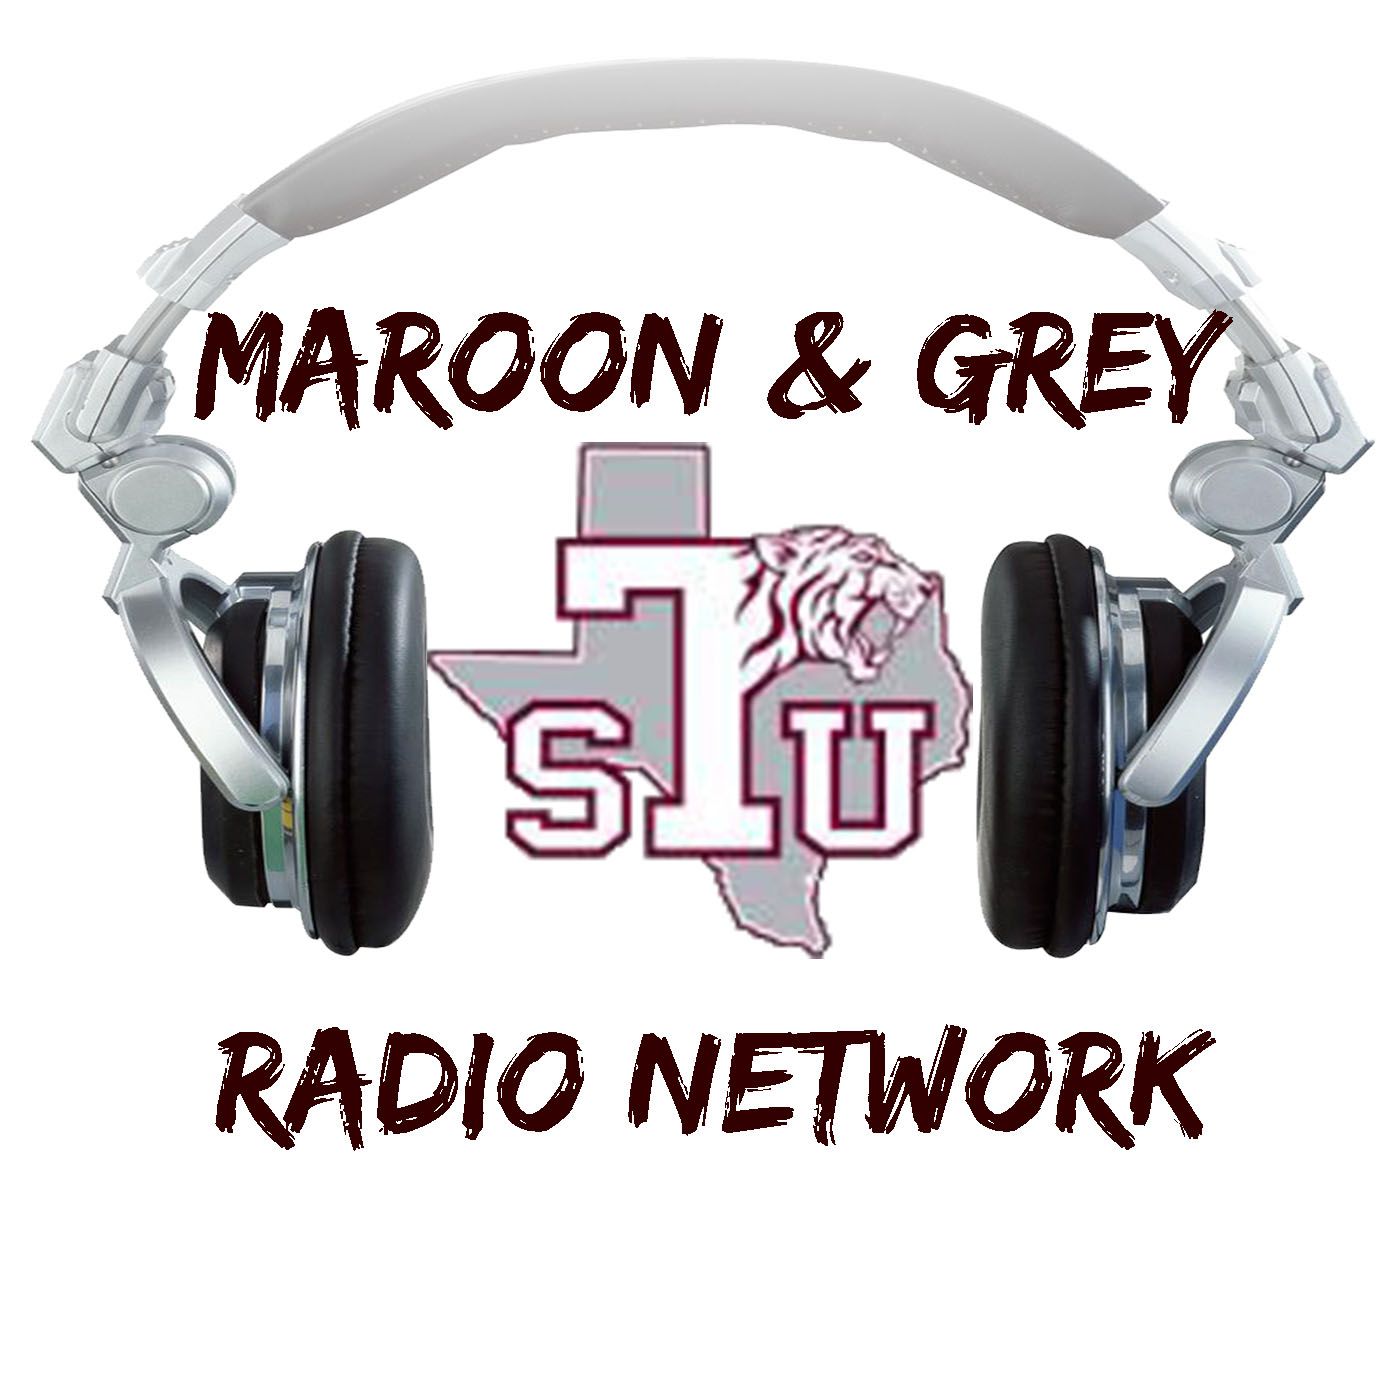 THE MAROON AND GREY RADIO NETWORK